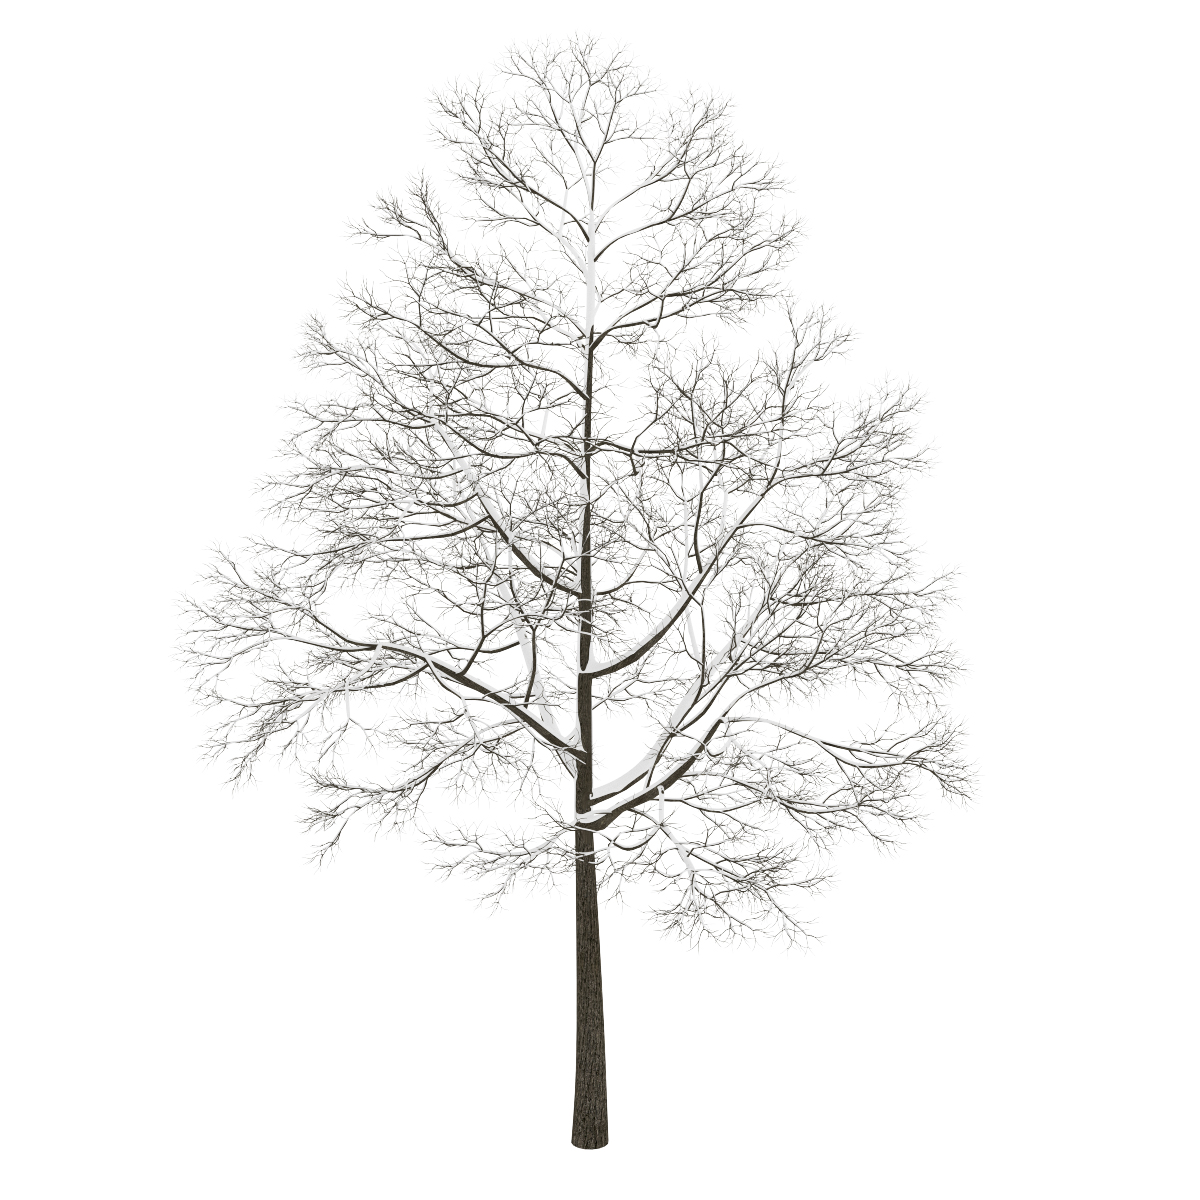 CGAxis Models Volume 28 Trees III